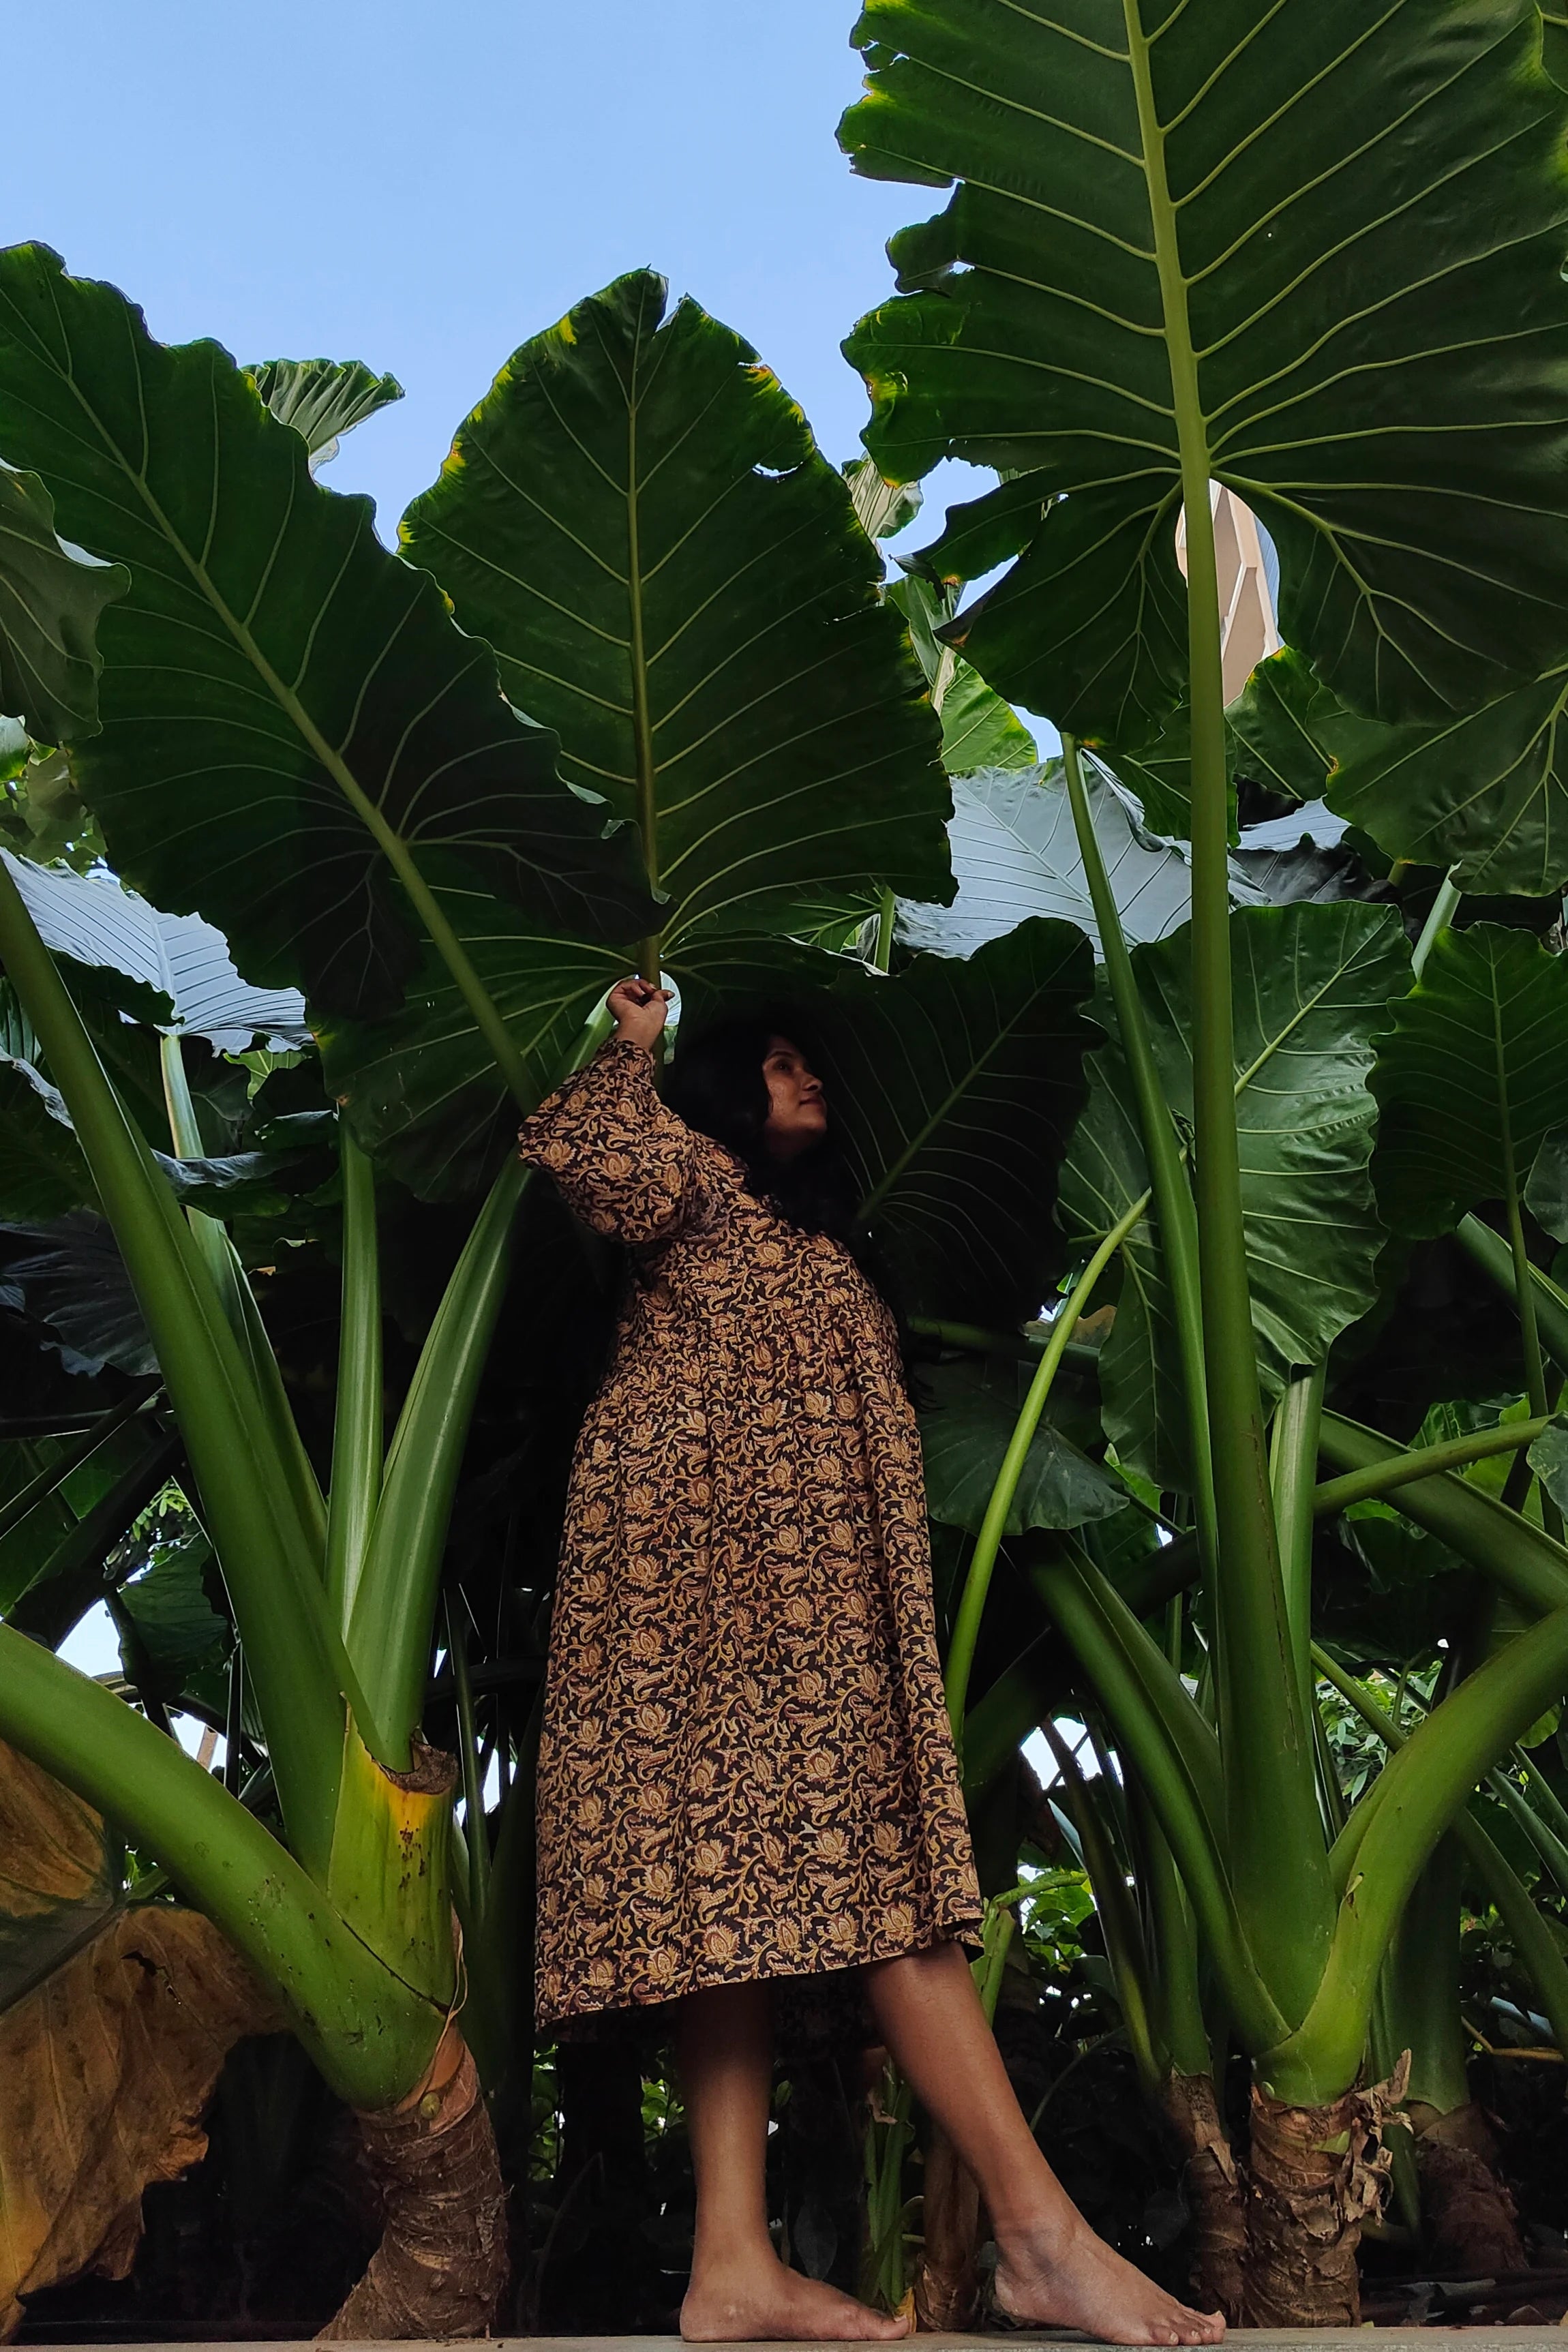 Ilamra hand block printed Kalamkari art organic cotton naturally dyed black, hazel, and beige, ruffle detailing, balloon sleeves ending in cuffs, calf-length dress